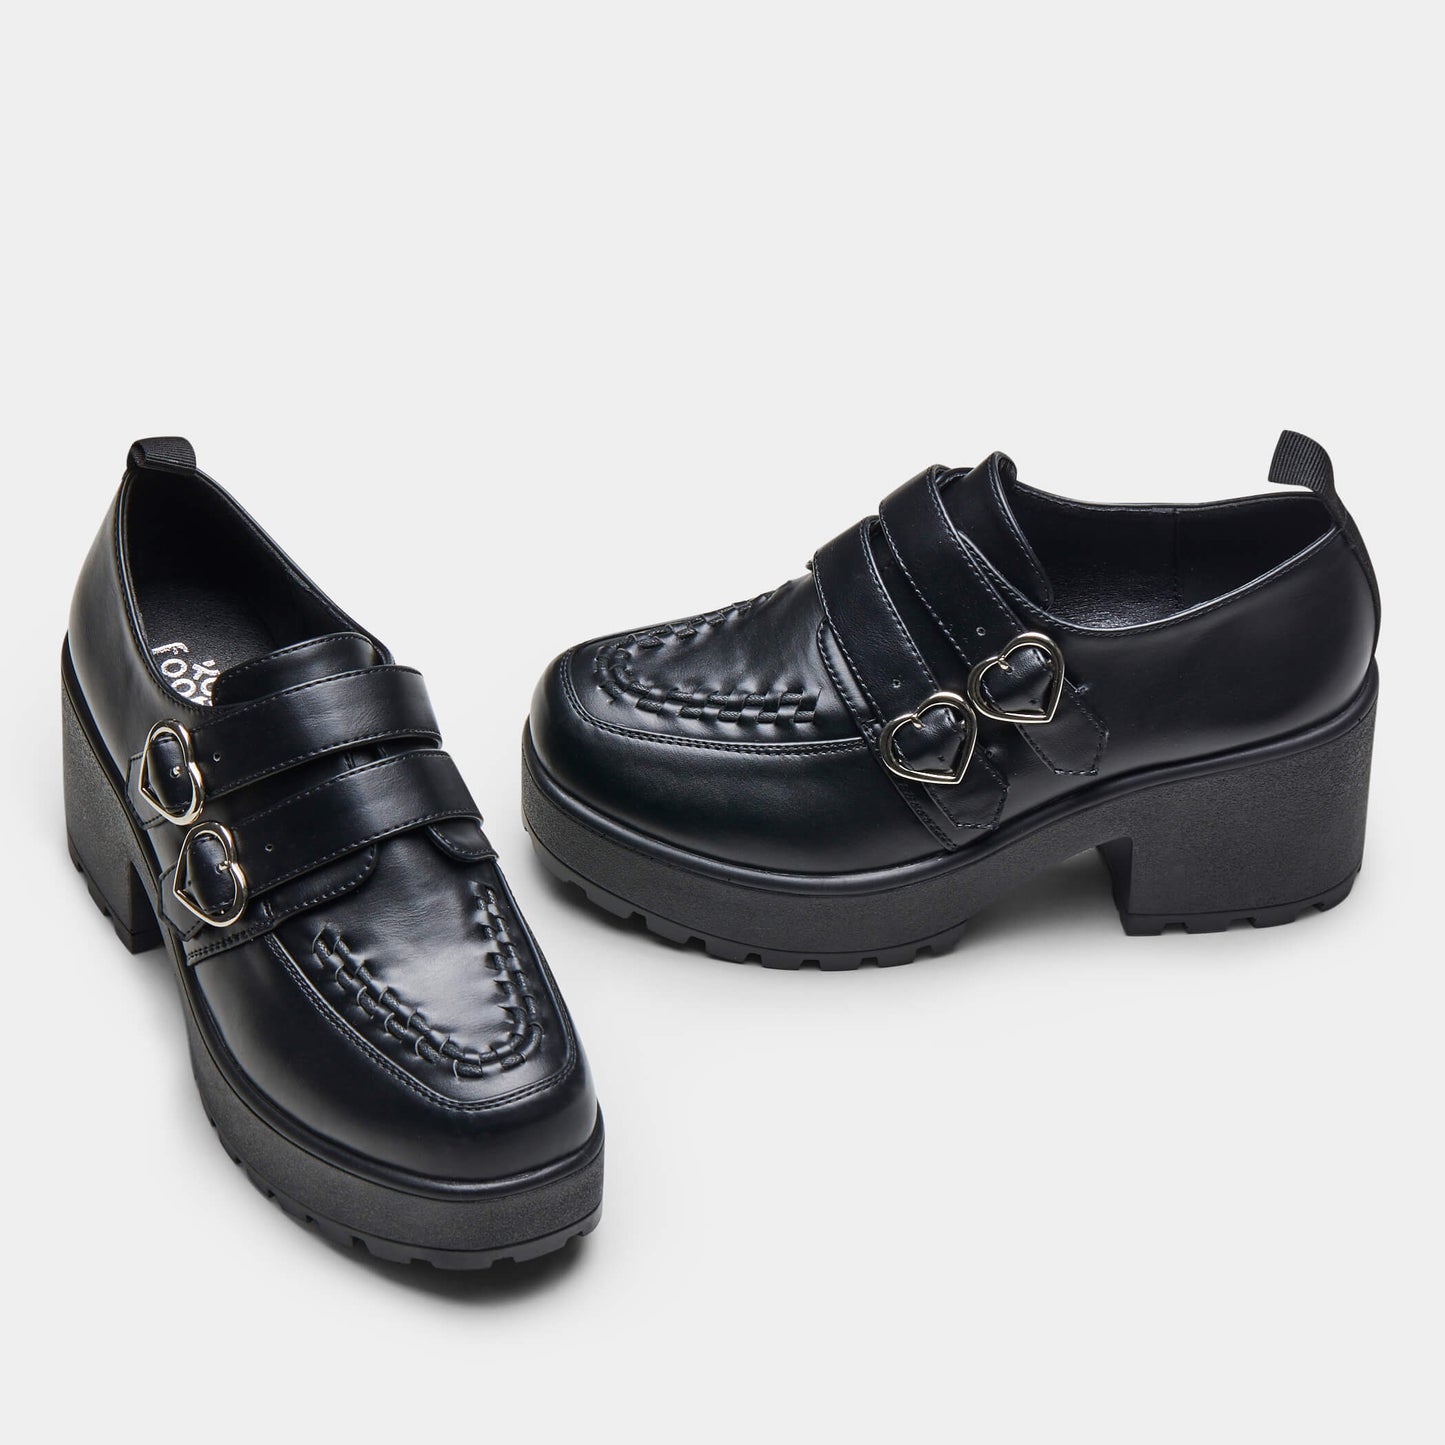 IAGO Metal Heart Oxford Platform Shoes - Shoes - KOI Footwear - Black - Top View